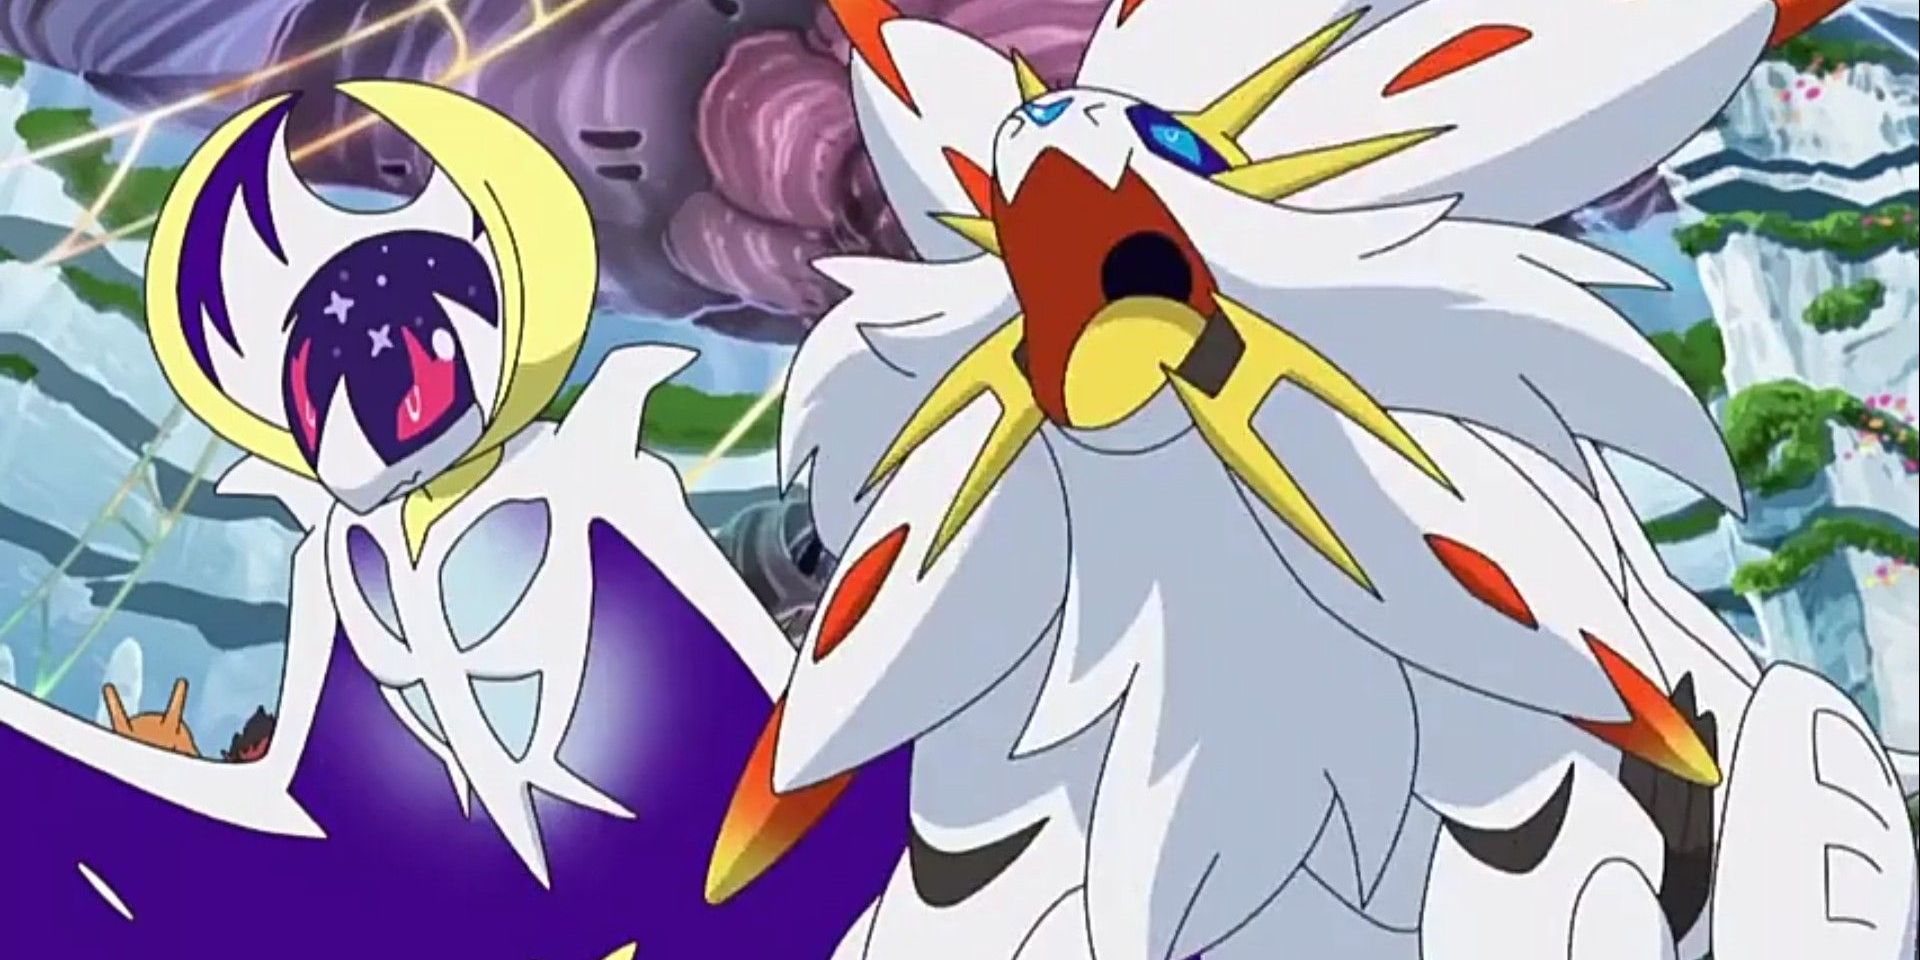 The Legendary Pokemon Lunala and Solgaleo from Pokemon anime.